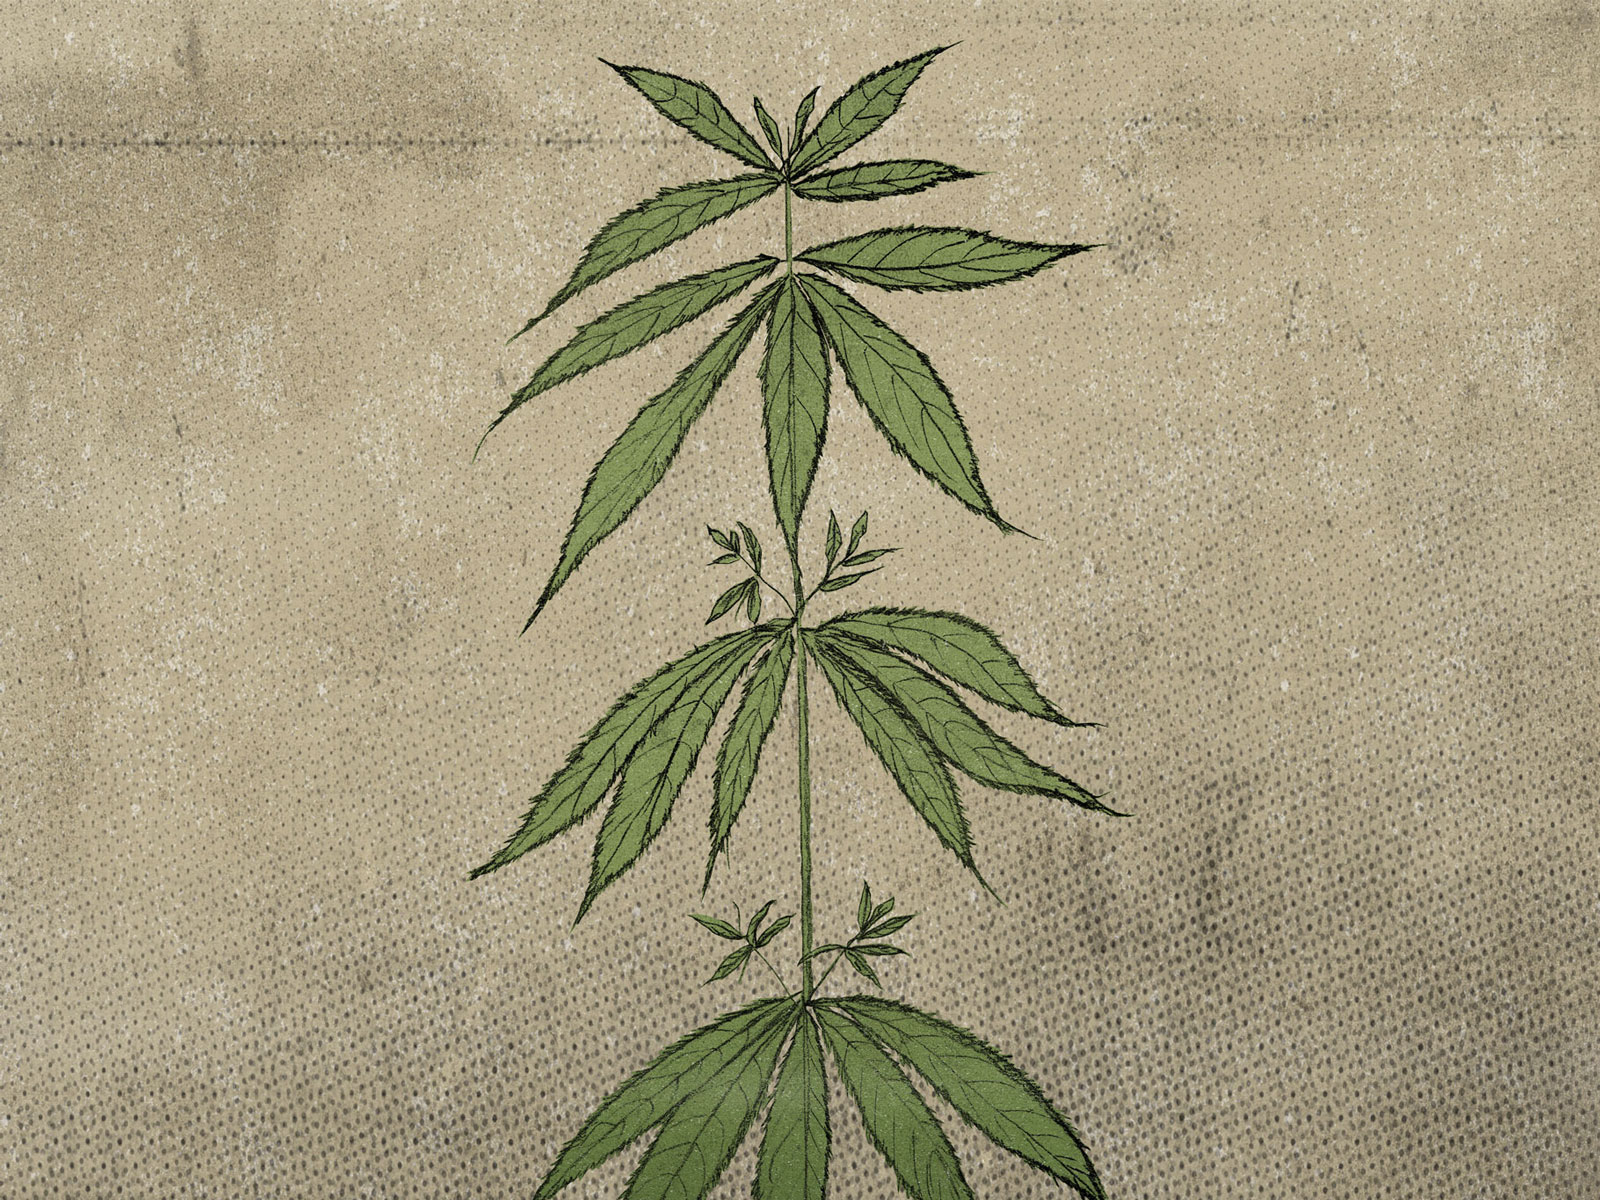 Hand Drawn Cannabis Plant Illustrations by Joshua on Dribbble